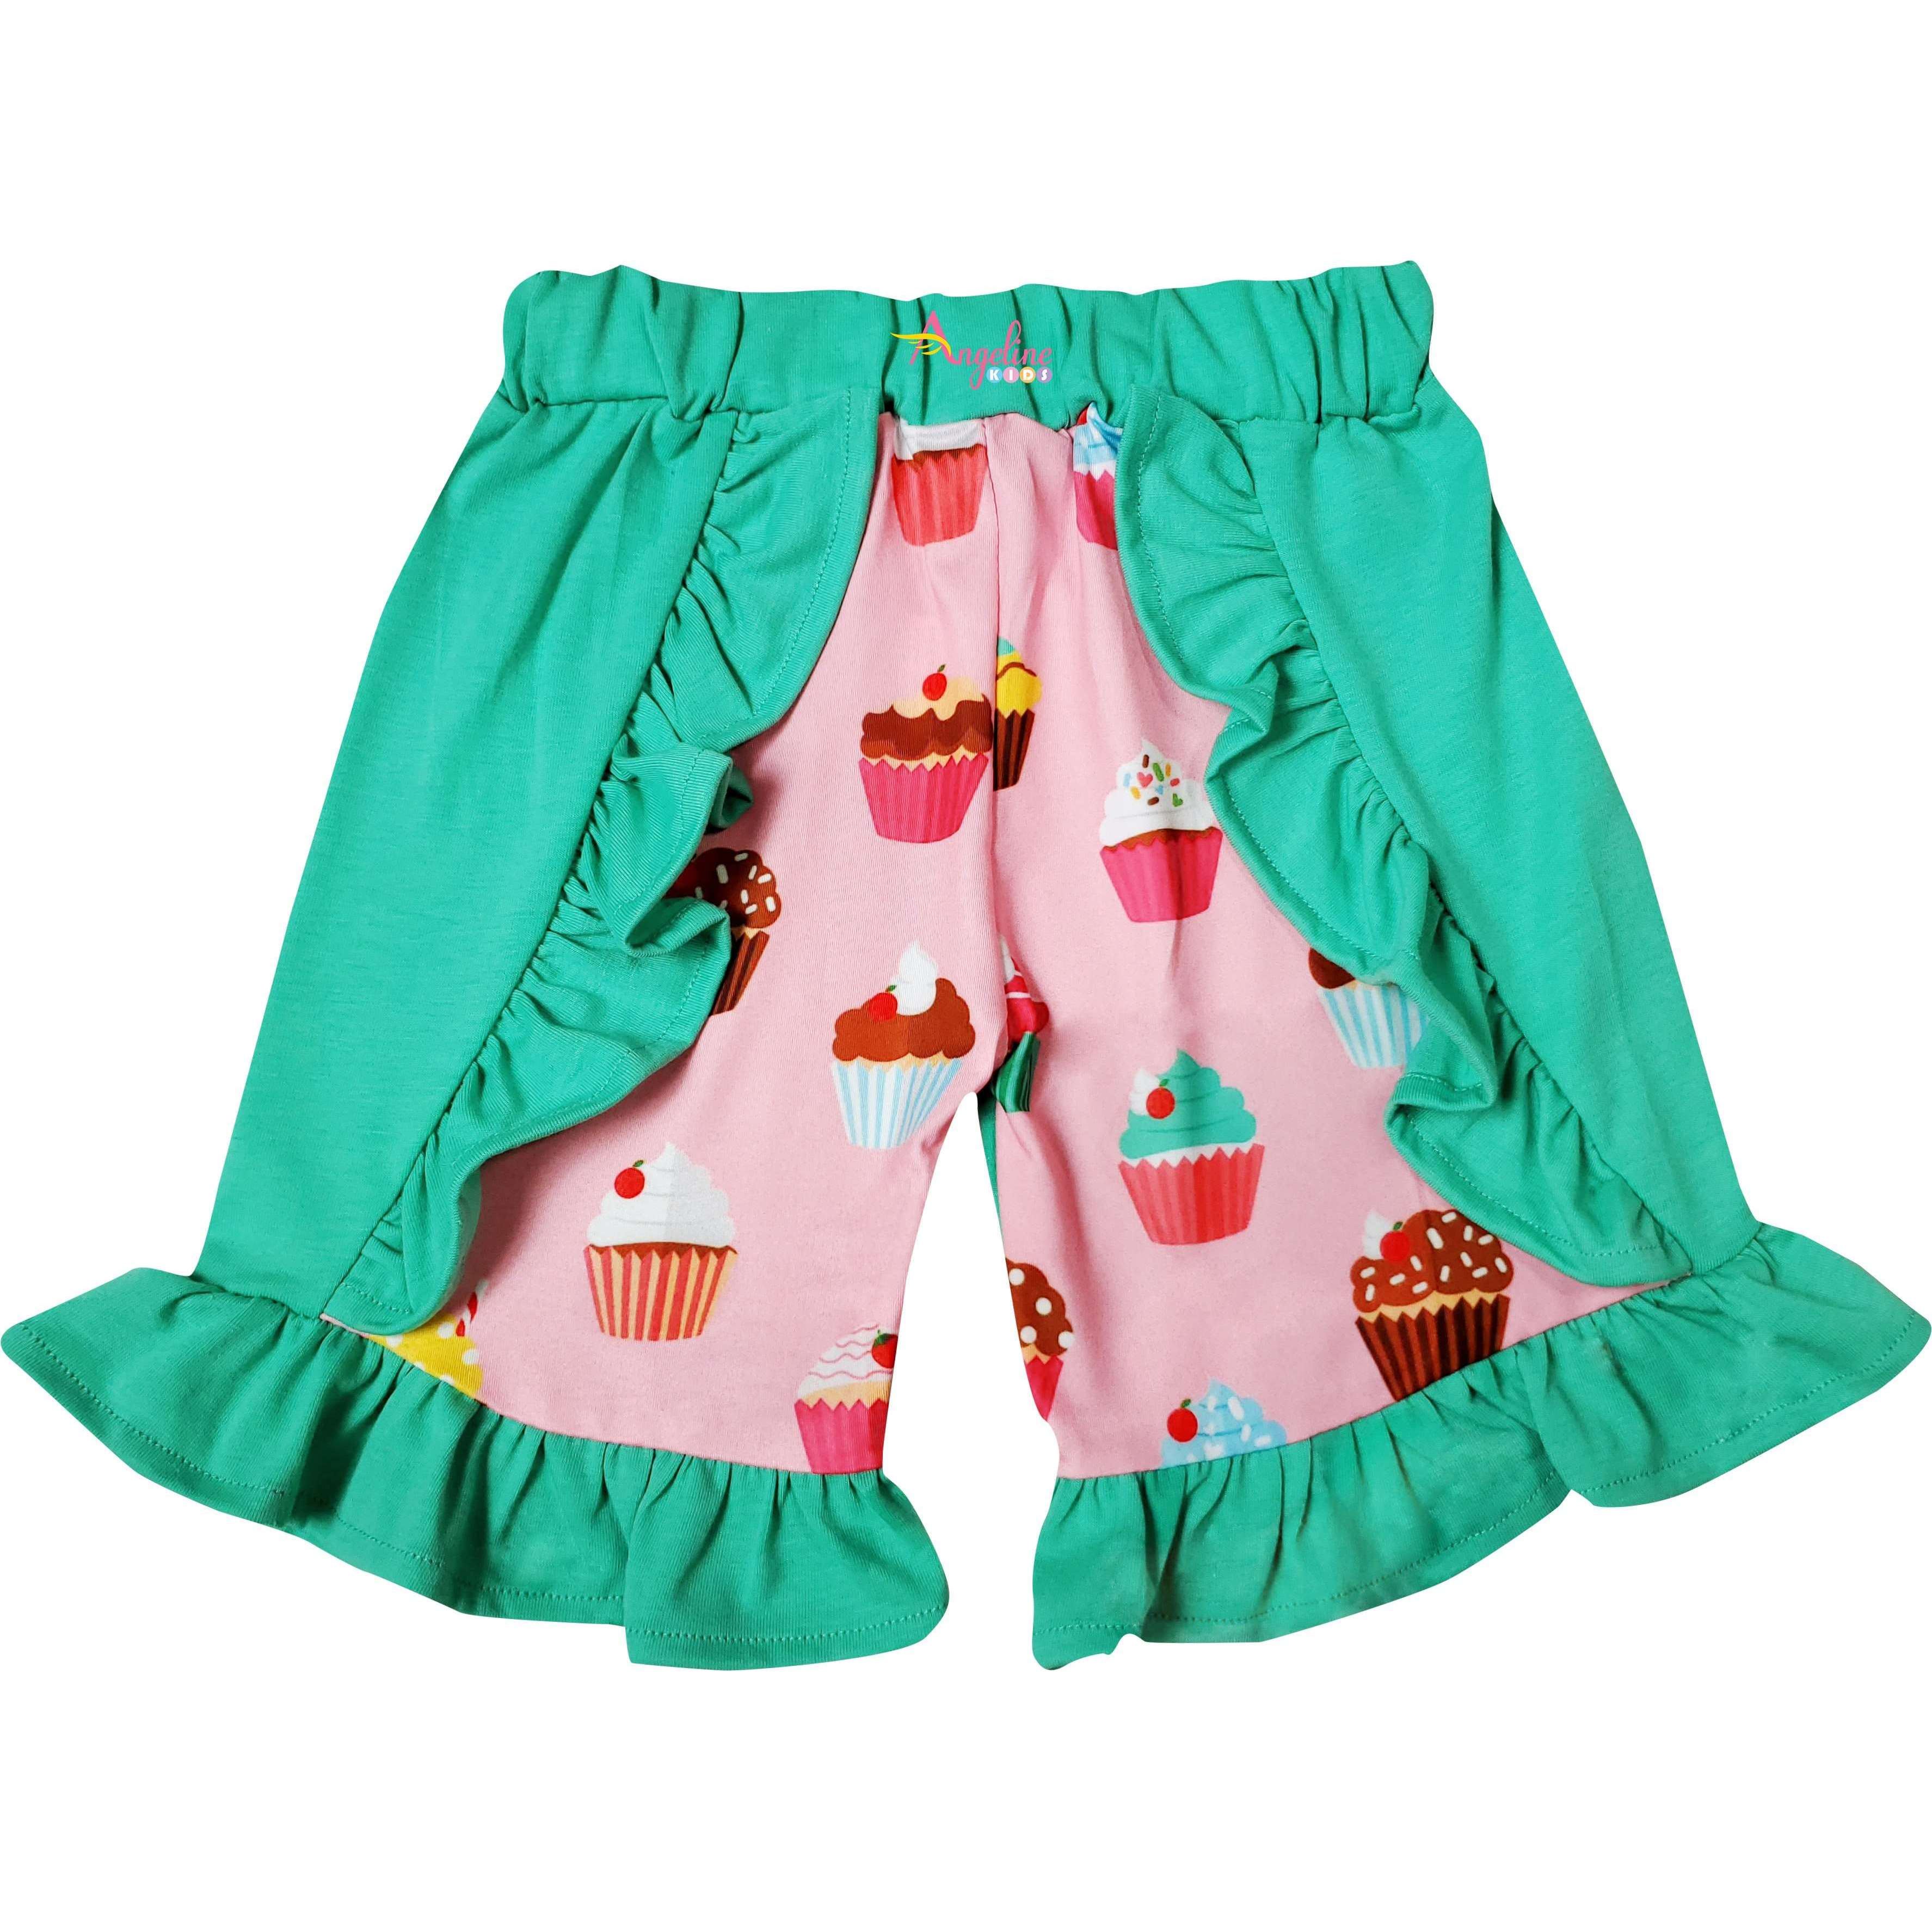 Angeline Kids:Baby Toddler Little Girls I Love Cupcake Ruffle Top Short Set